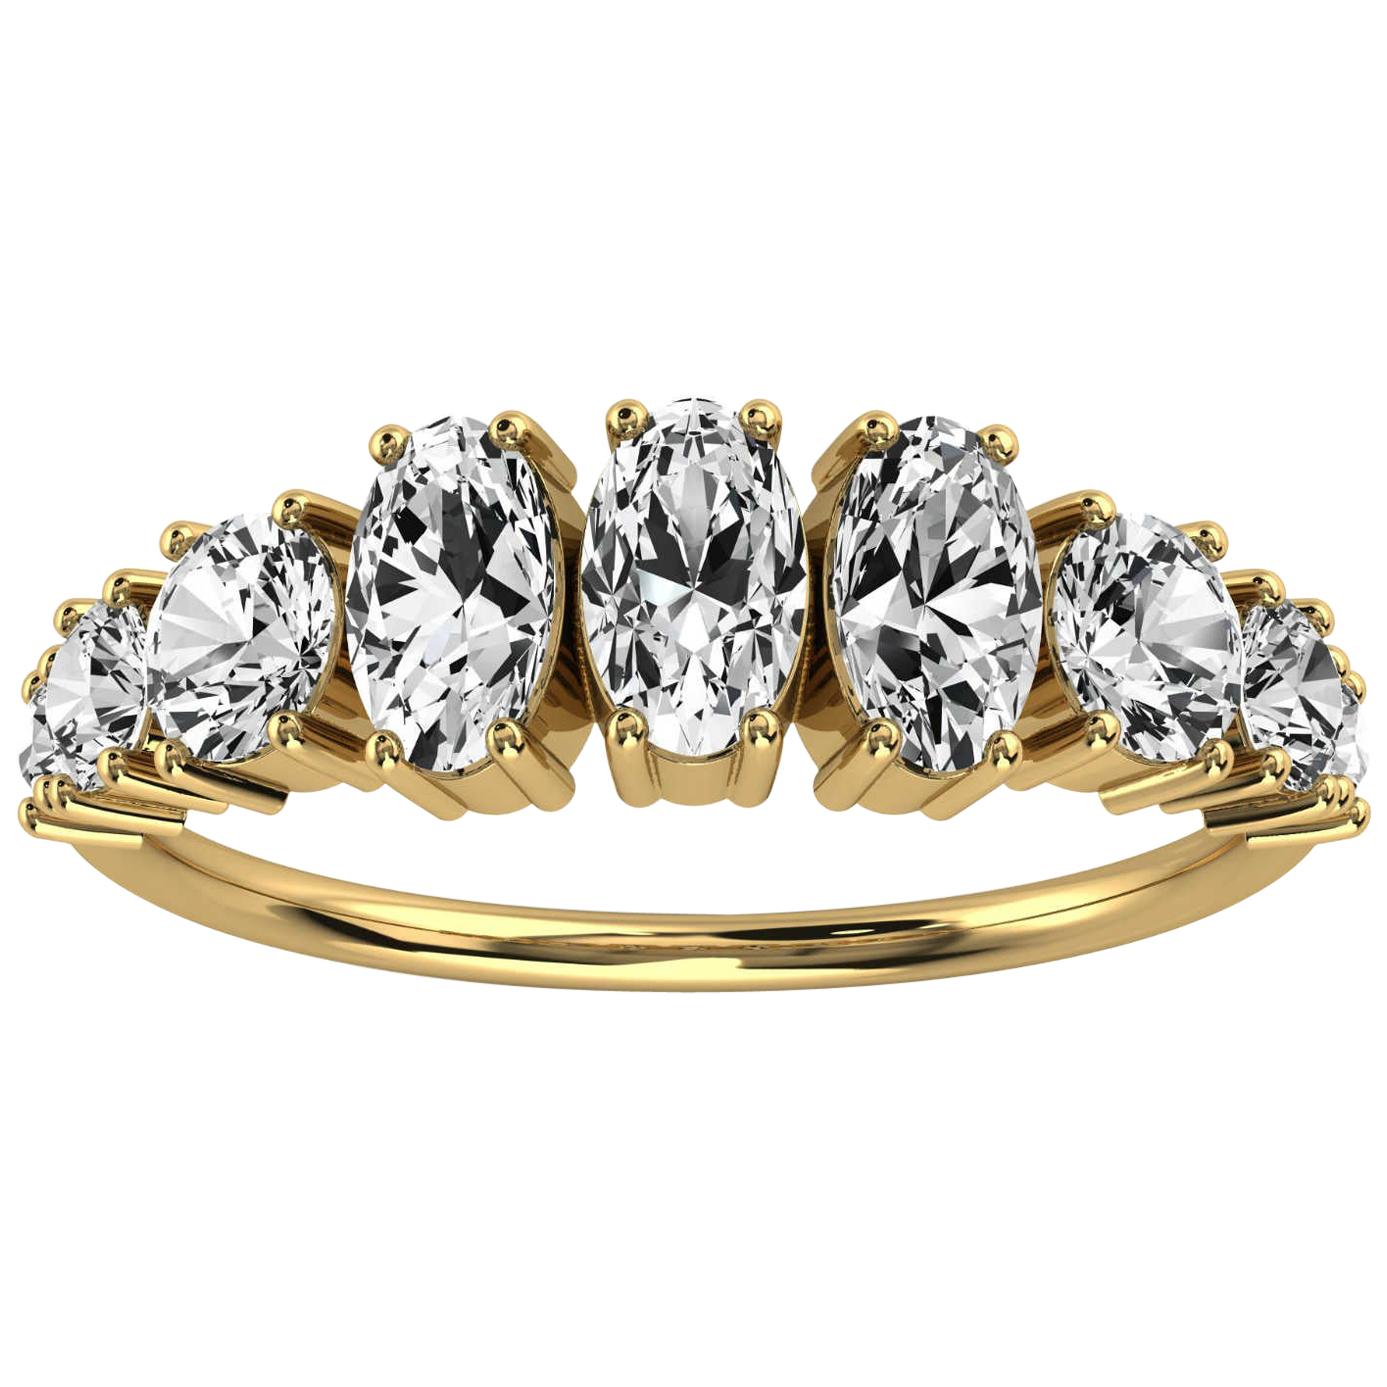 14k Yellow Gold Kym Oval and Round Organic Design Diamond Ring '1 1/4 Ct. Tw'